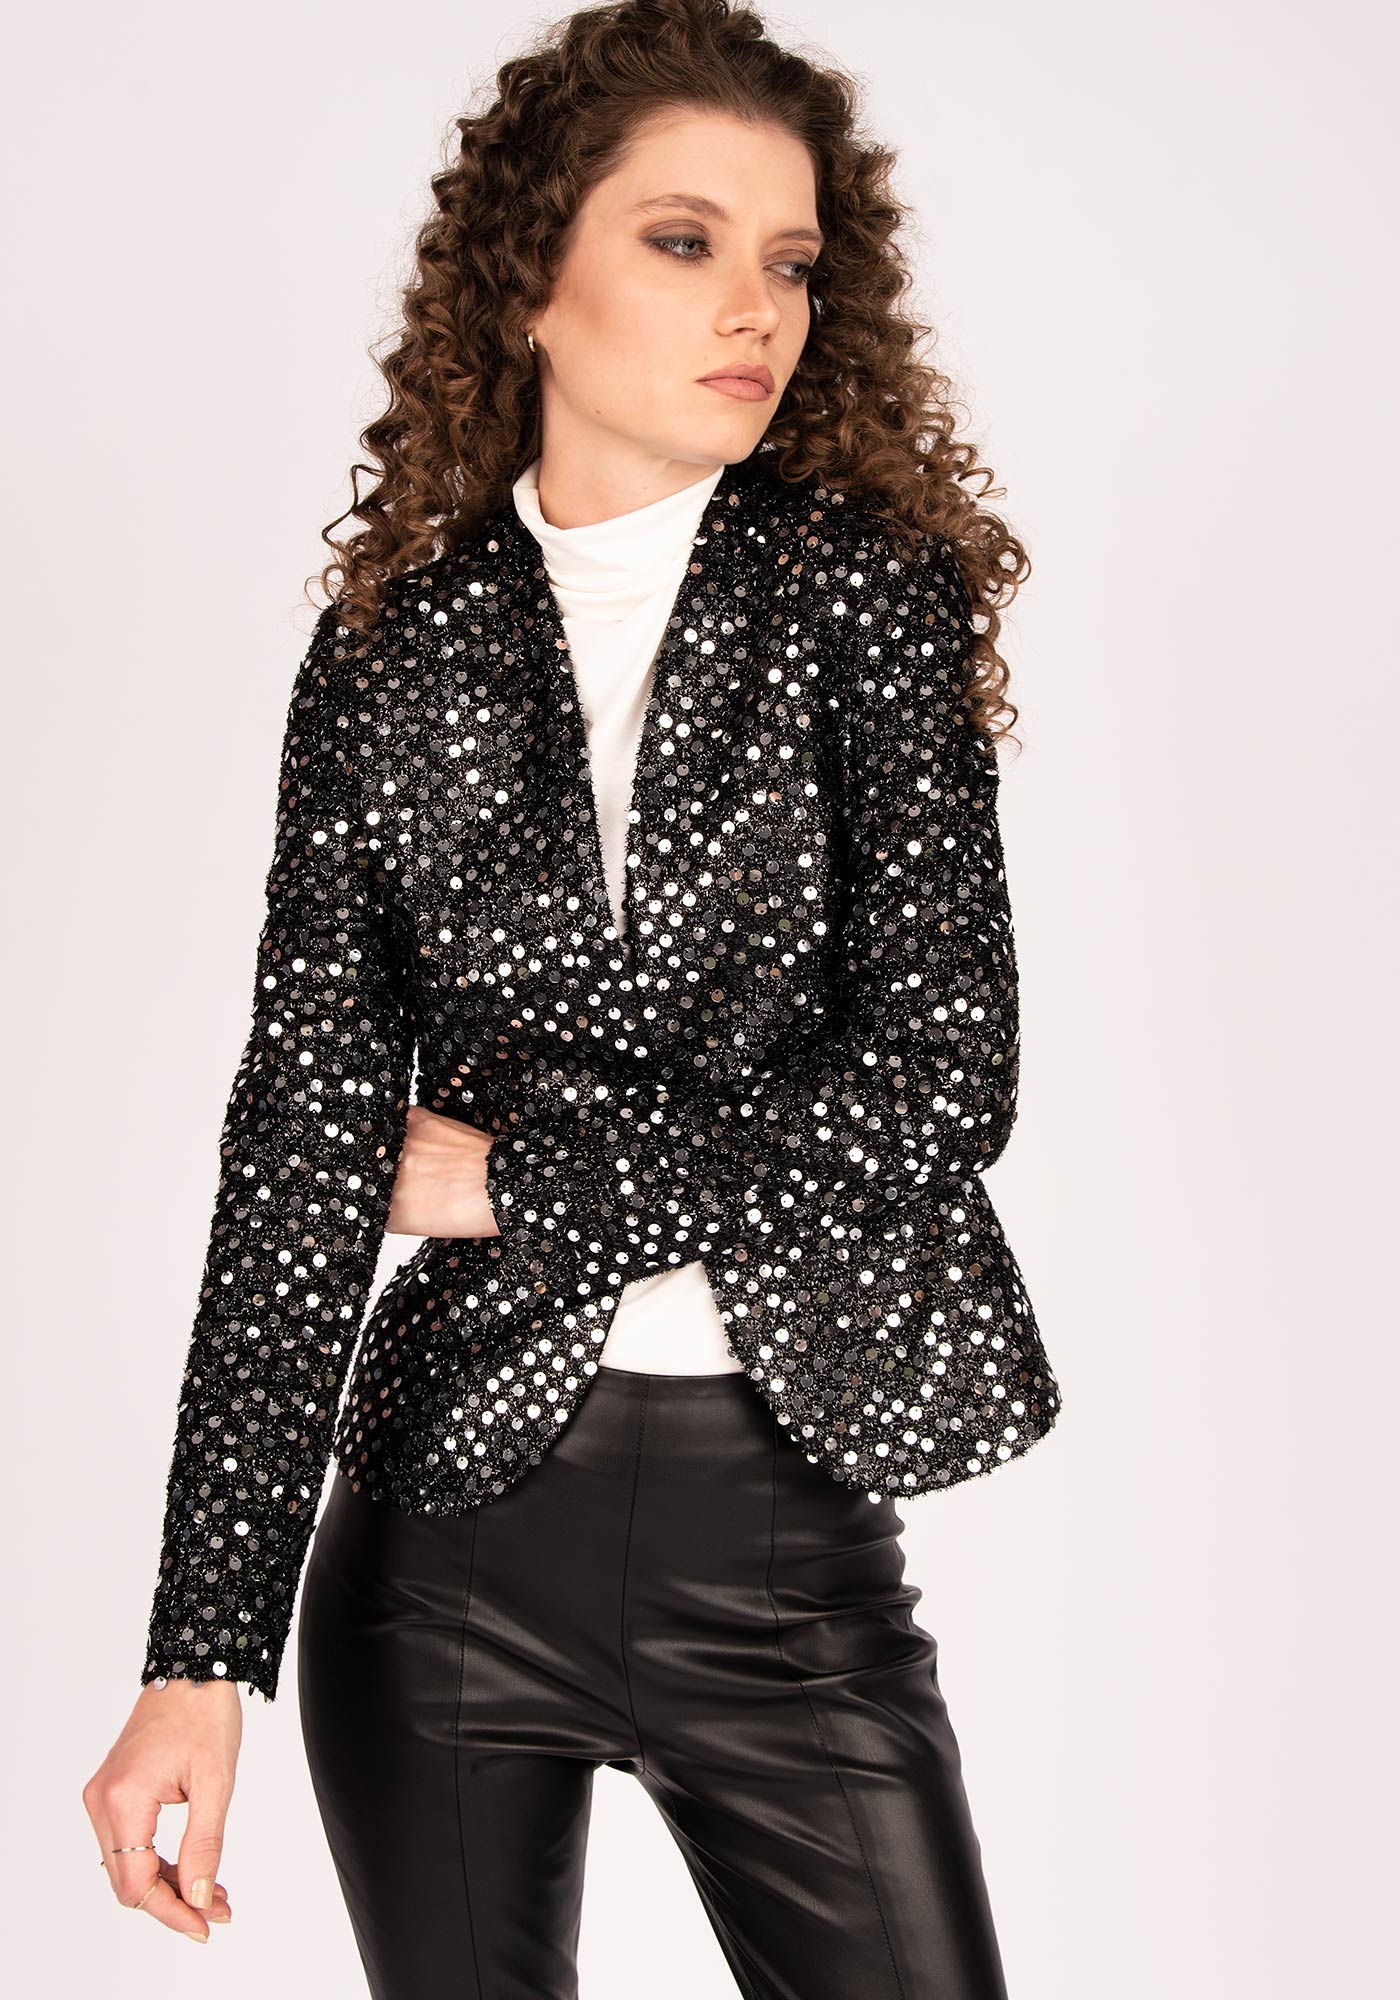 Women's Tailored Statement Blazer with Silvery Black Sequins